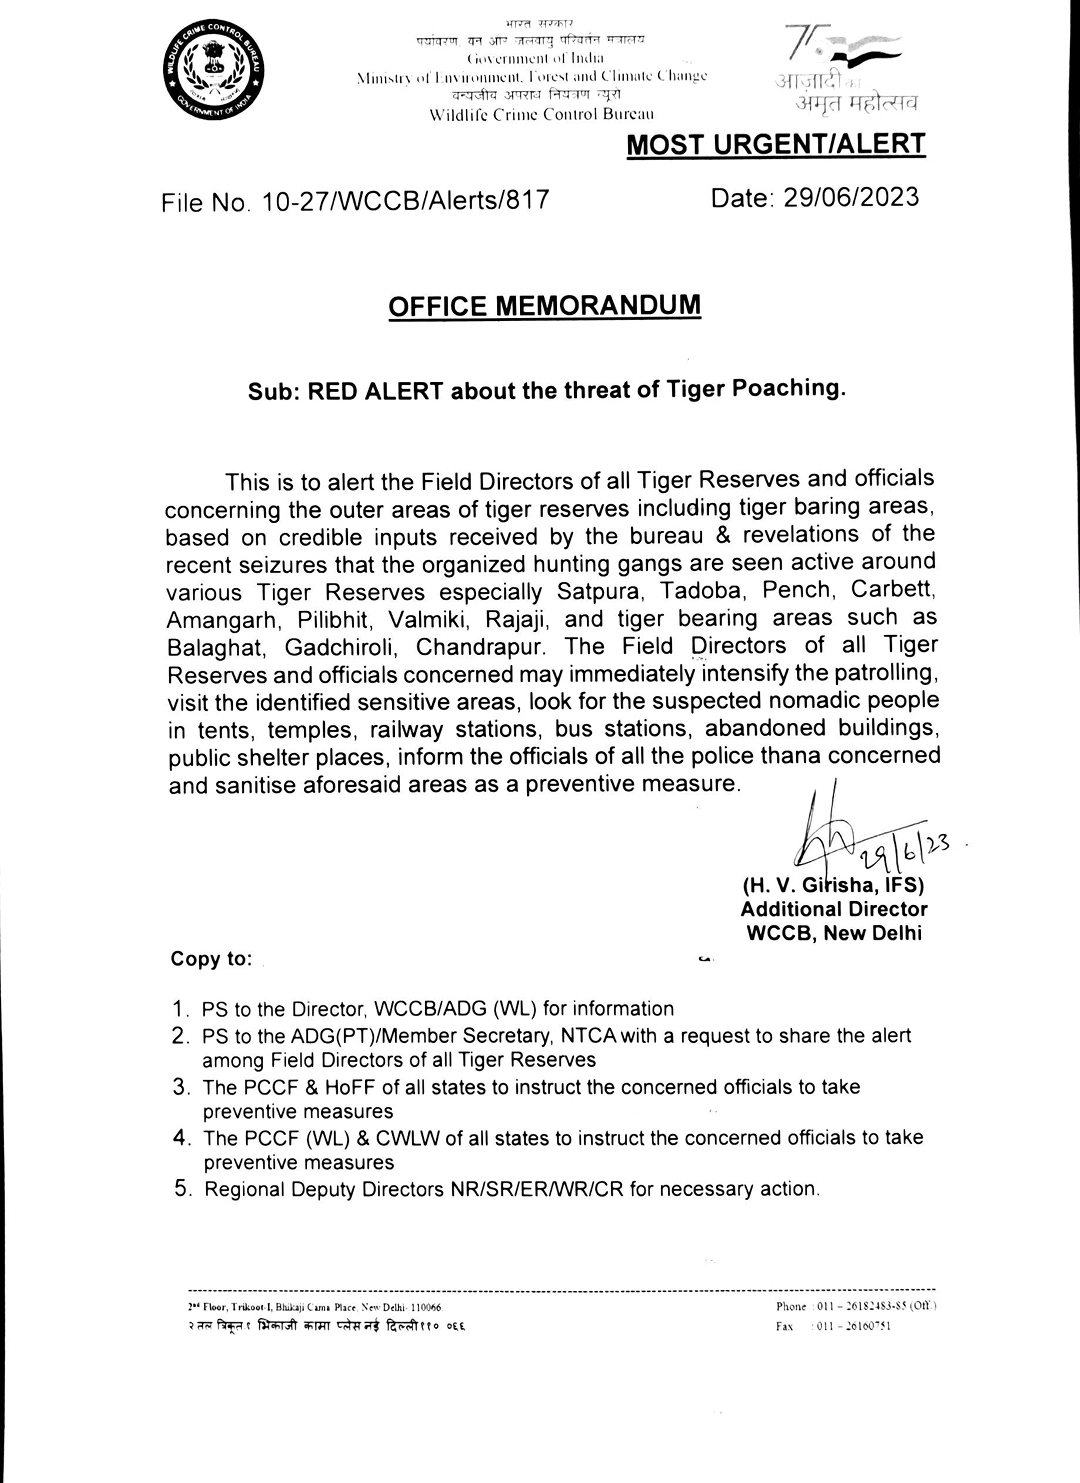 Red alert in tiger reserve area